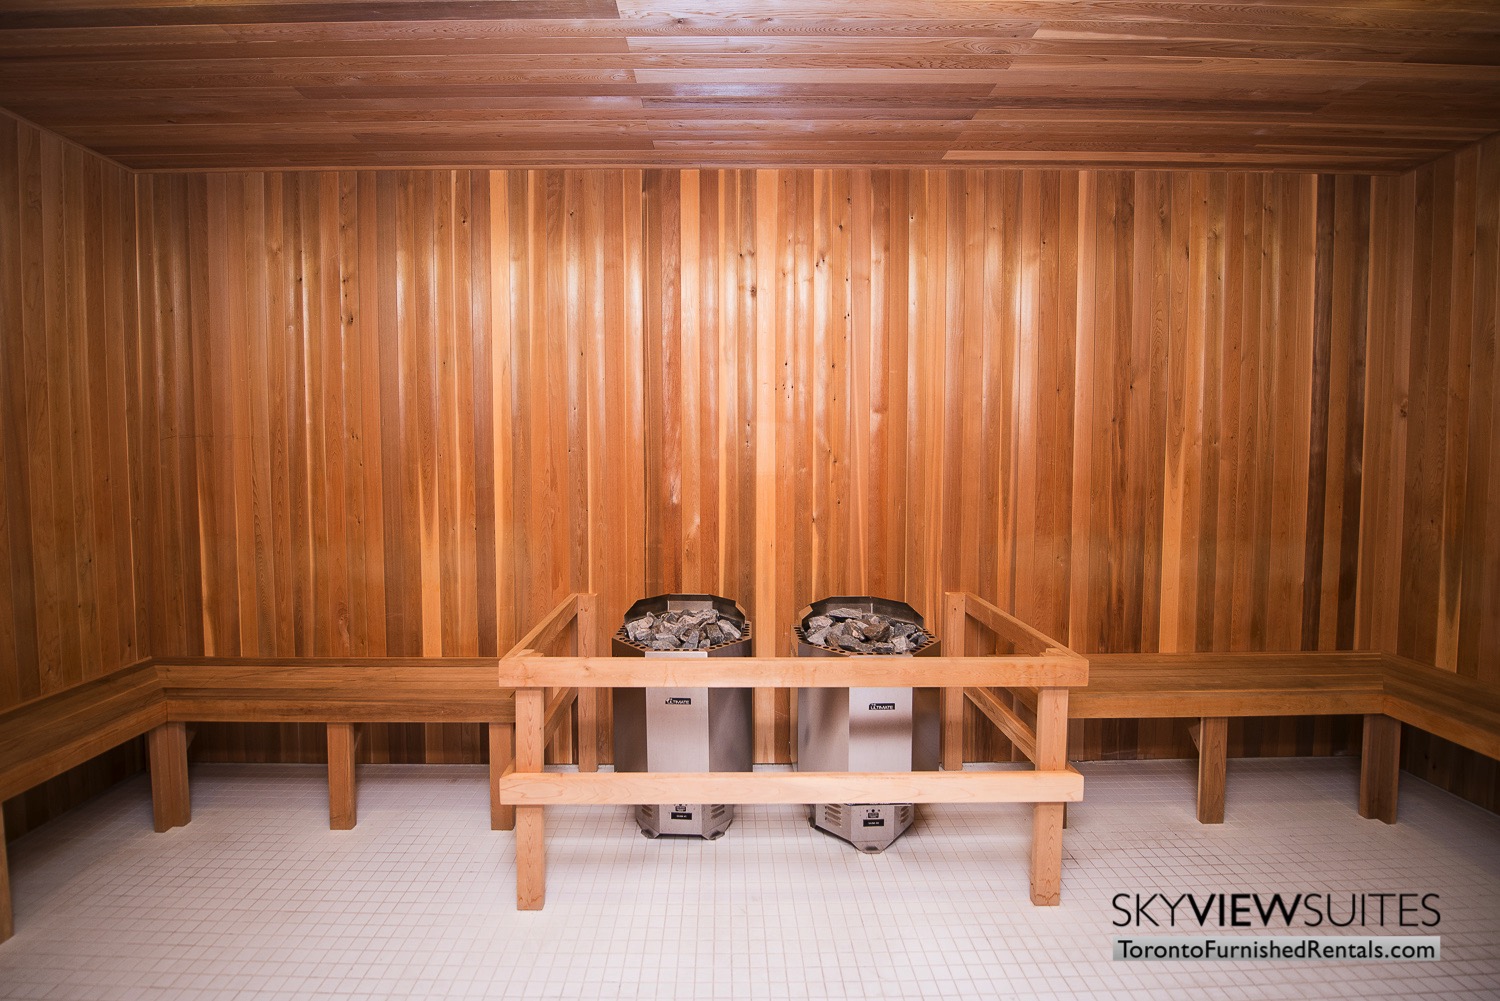 352 Front St. W., Toronto furnished rental sauna